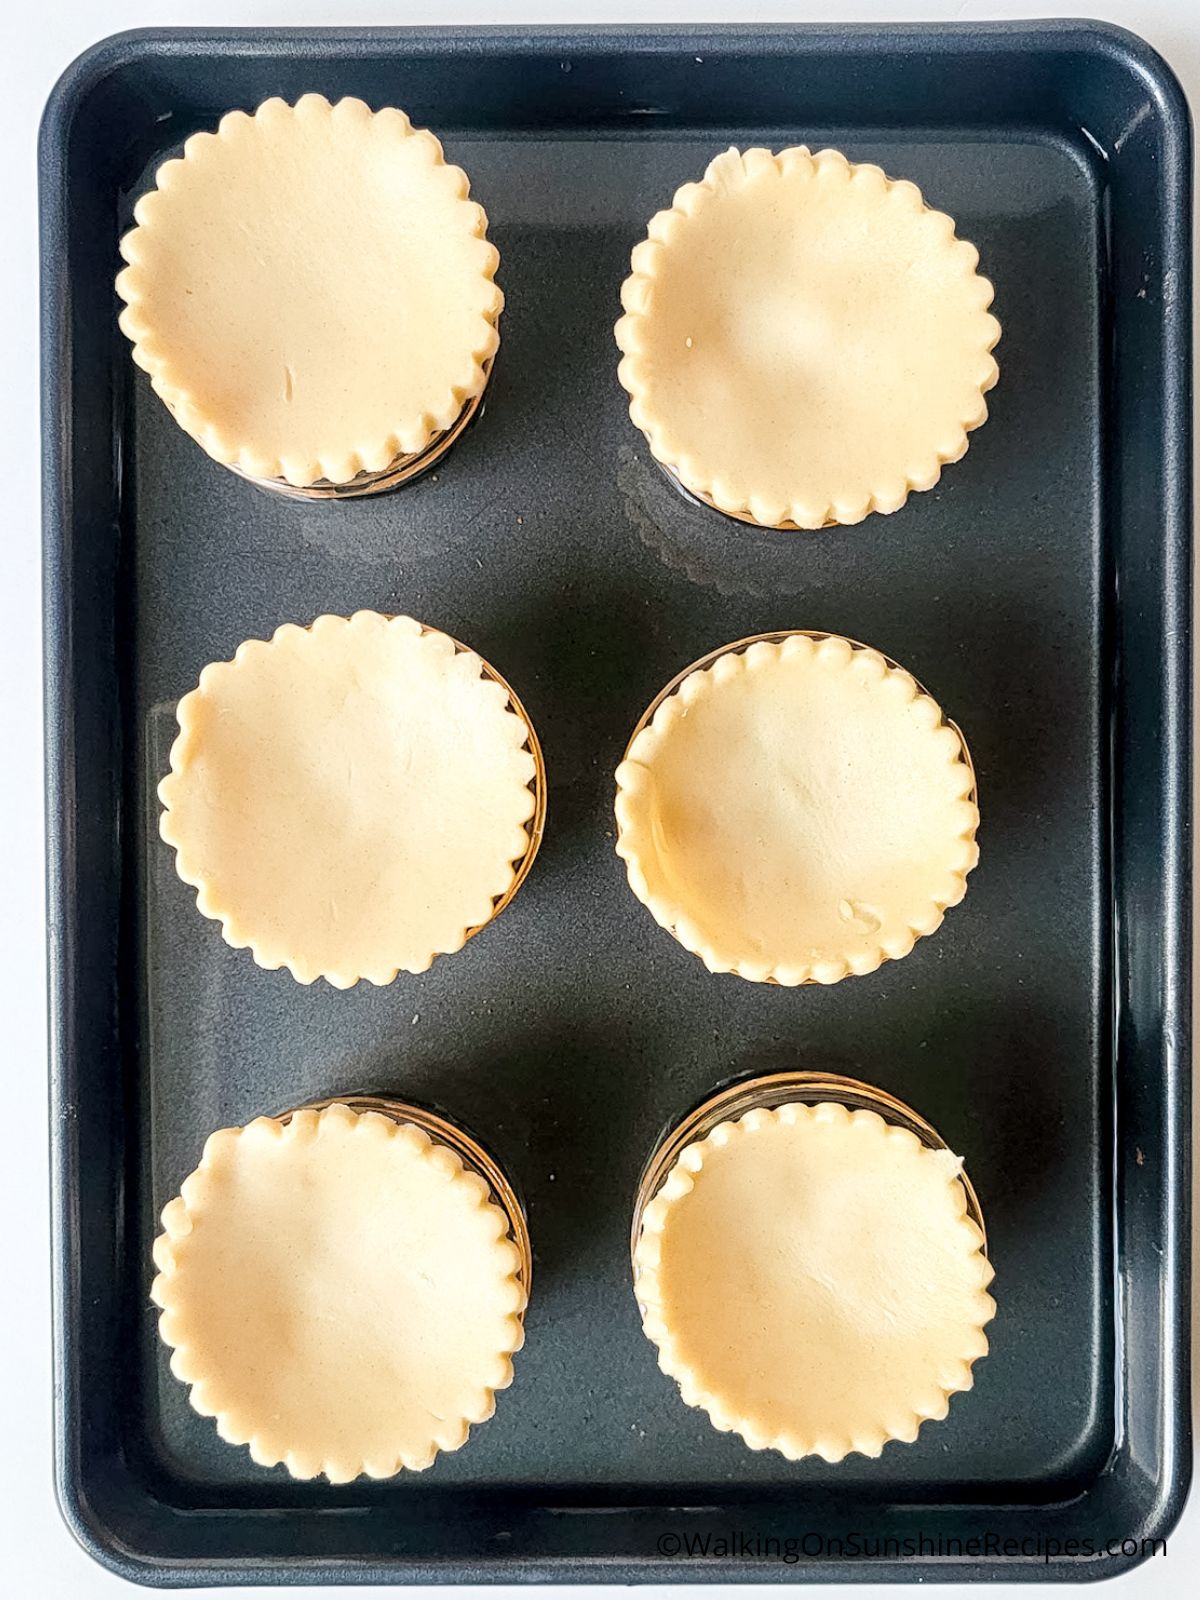 mini apple pies in baking tray.